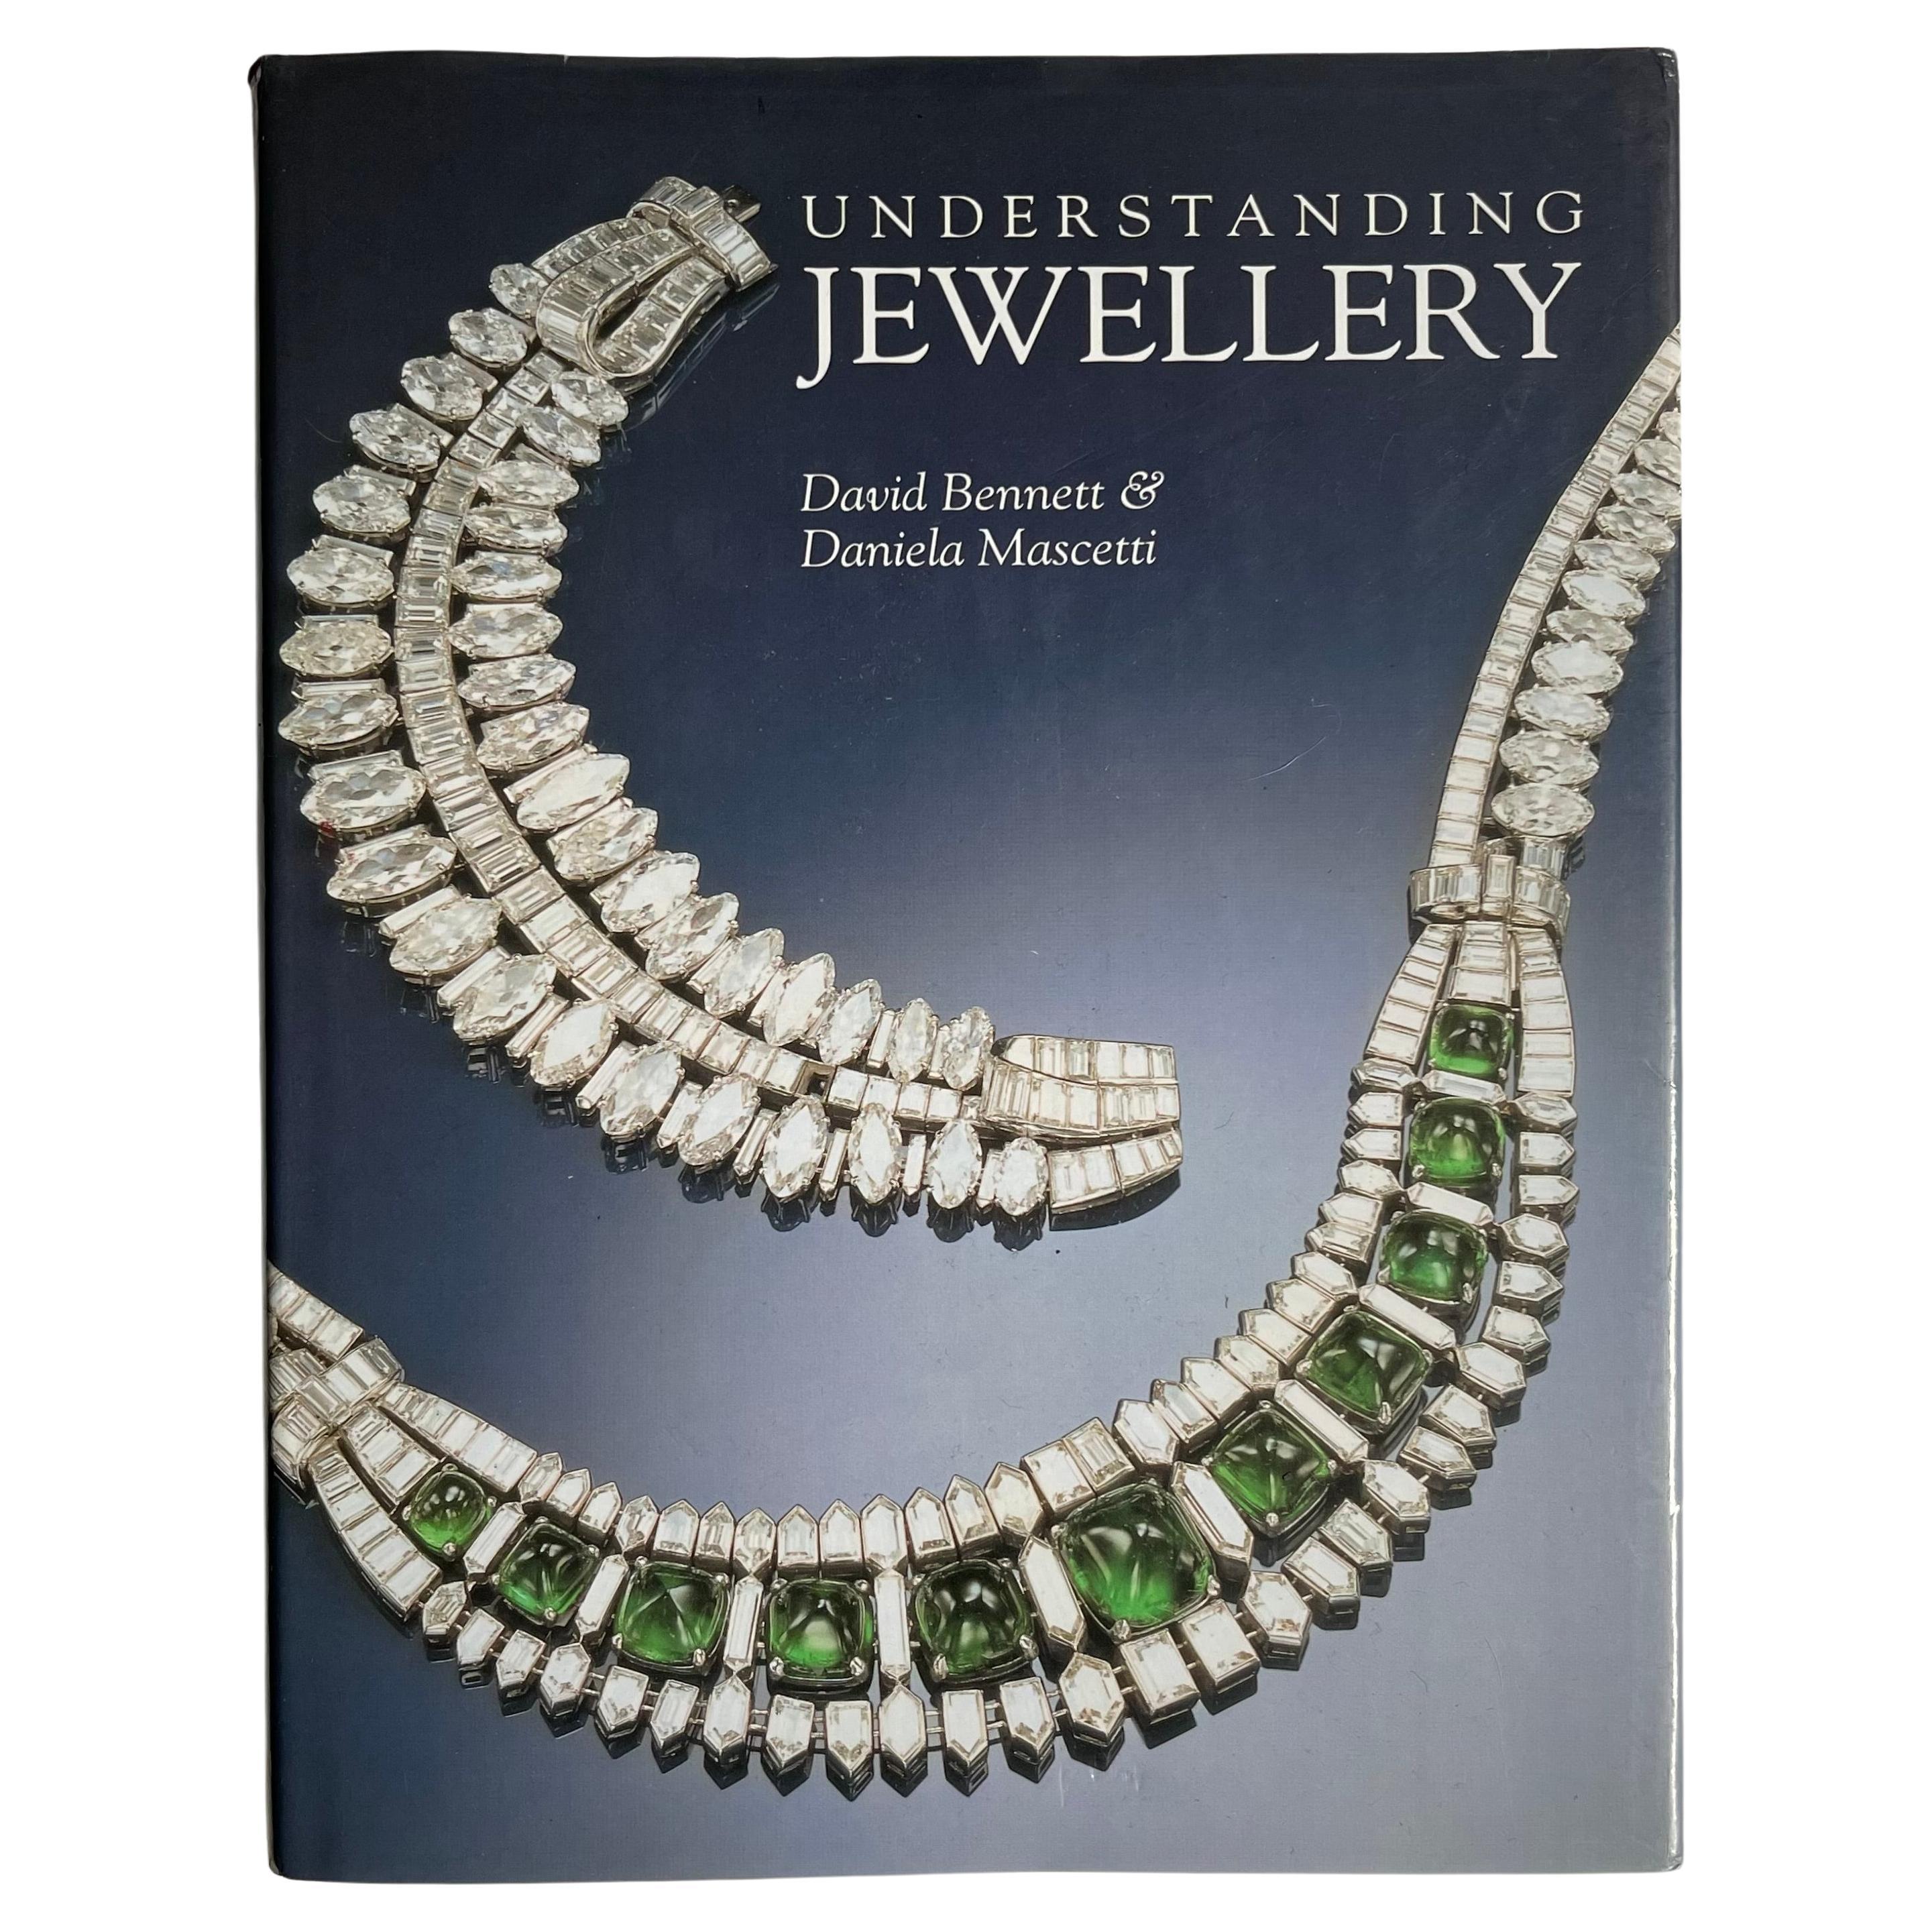 Understanding Jewellery - David Bennett & Daniela Mascetti - 1994